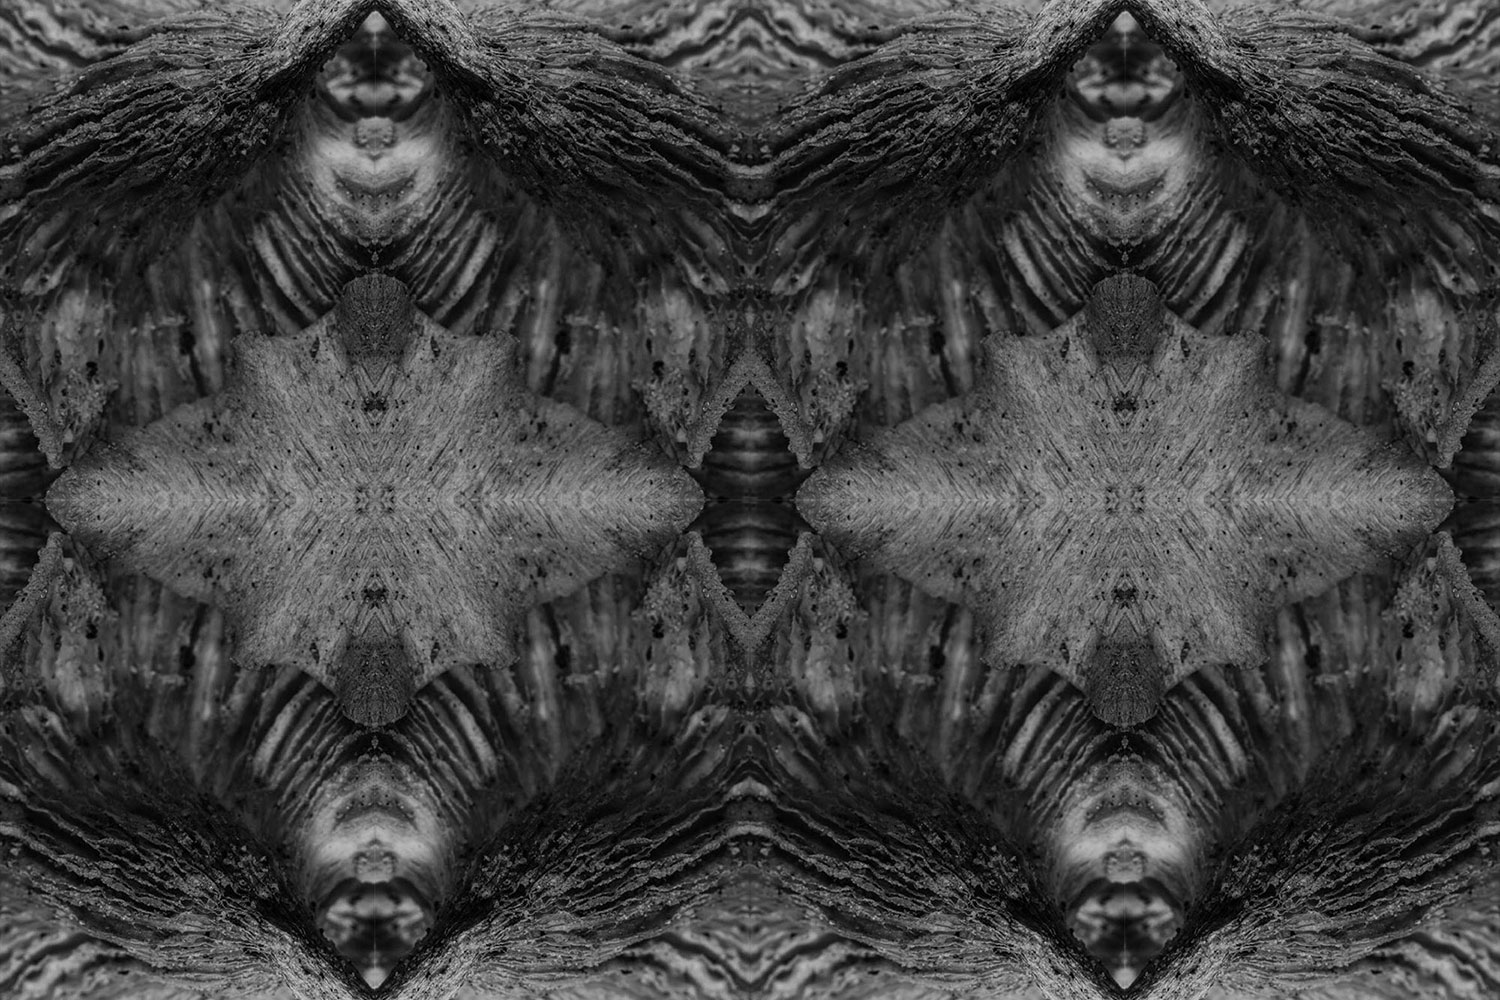 Black and white photograph of a reishi mushroom mirrored to achieve a pareidolia effect.